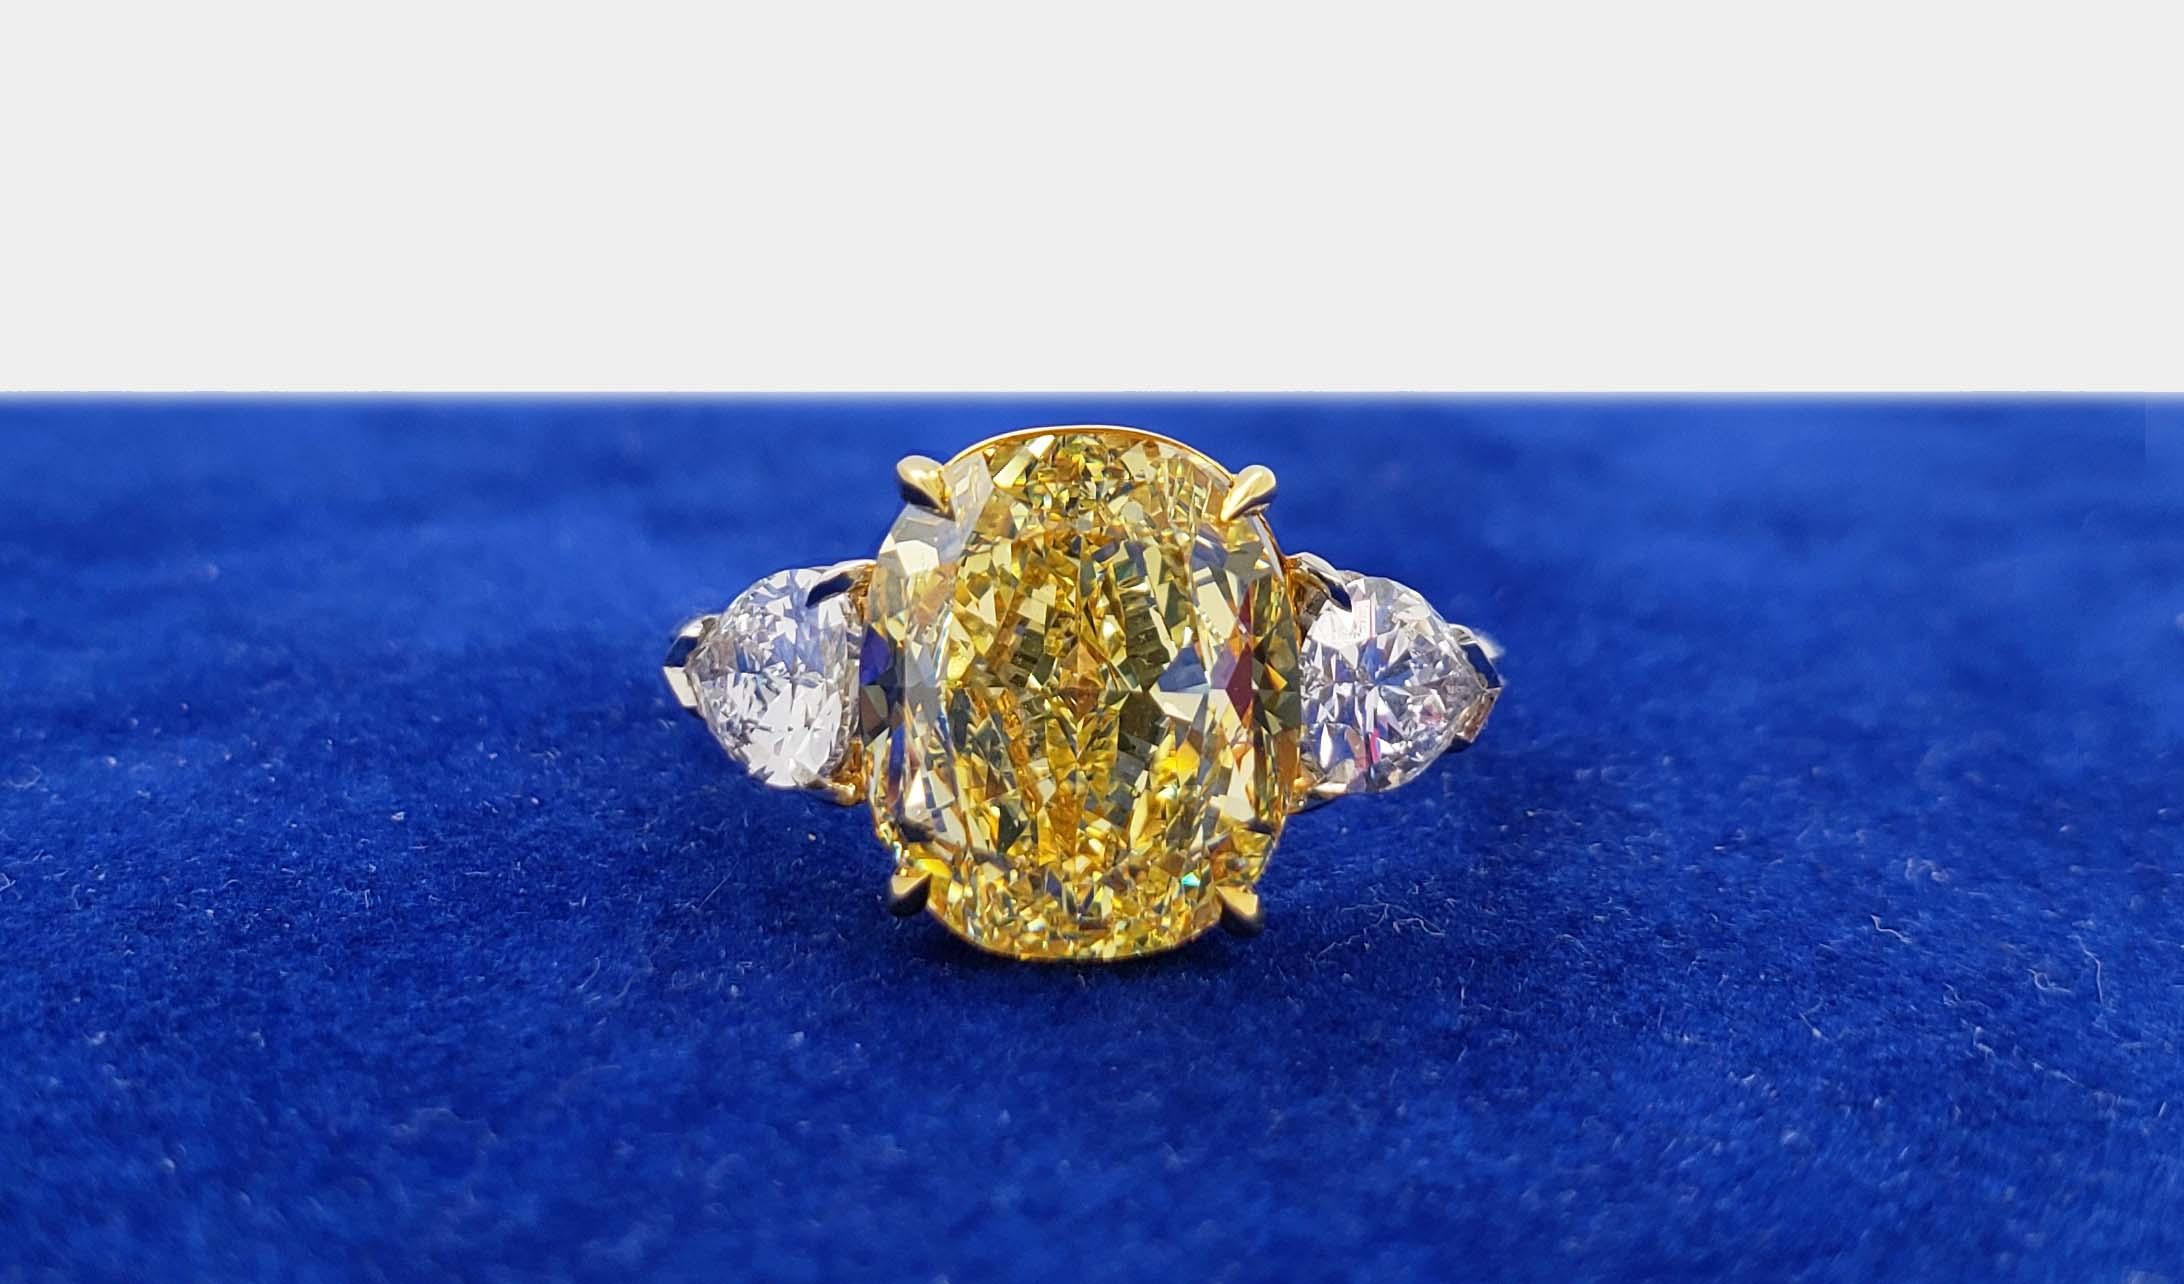 Scarselli 5.68 Carat Fancy Intense Yellow Cushion Cut Diamond Ring in Platinum 1